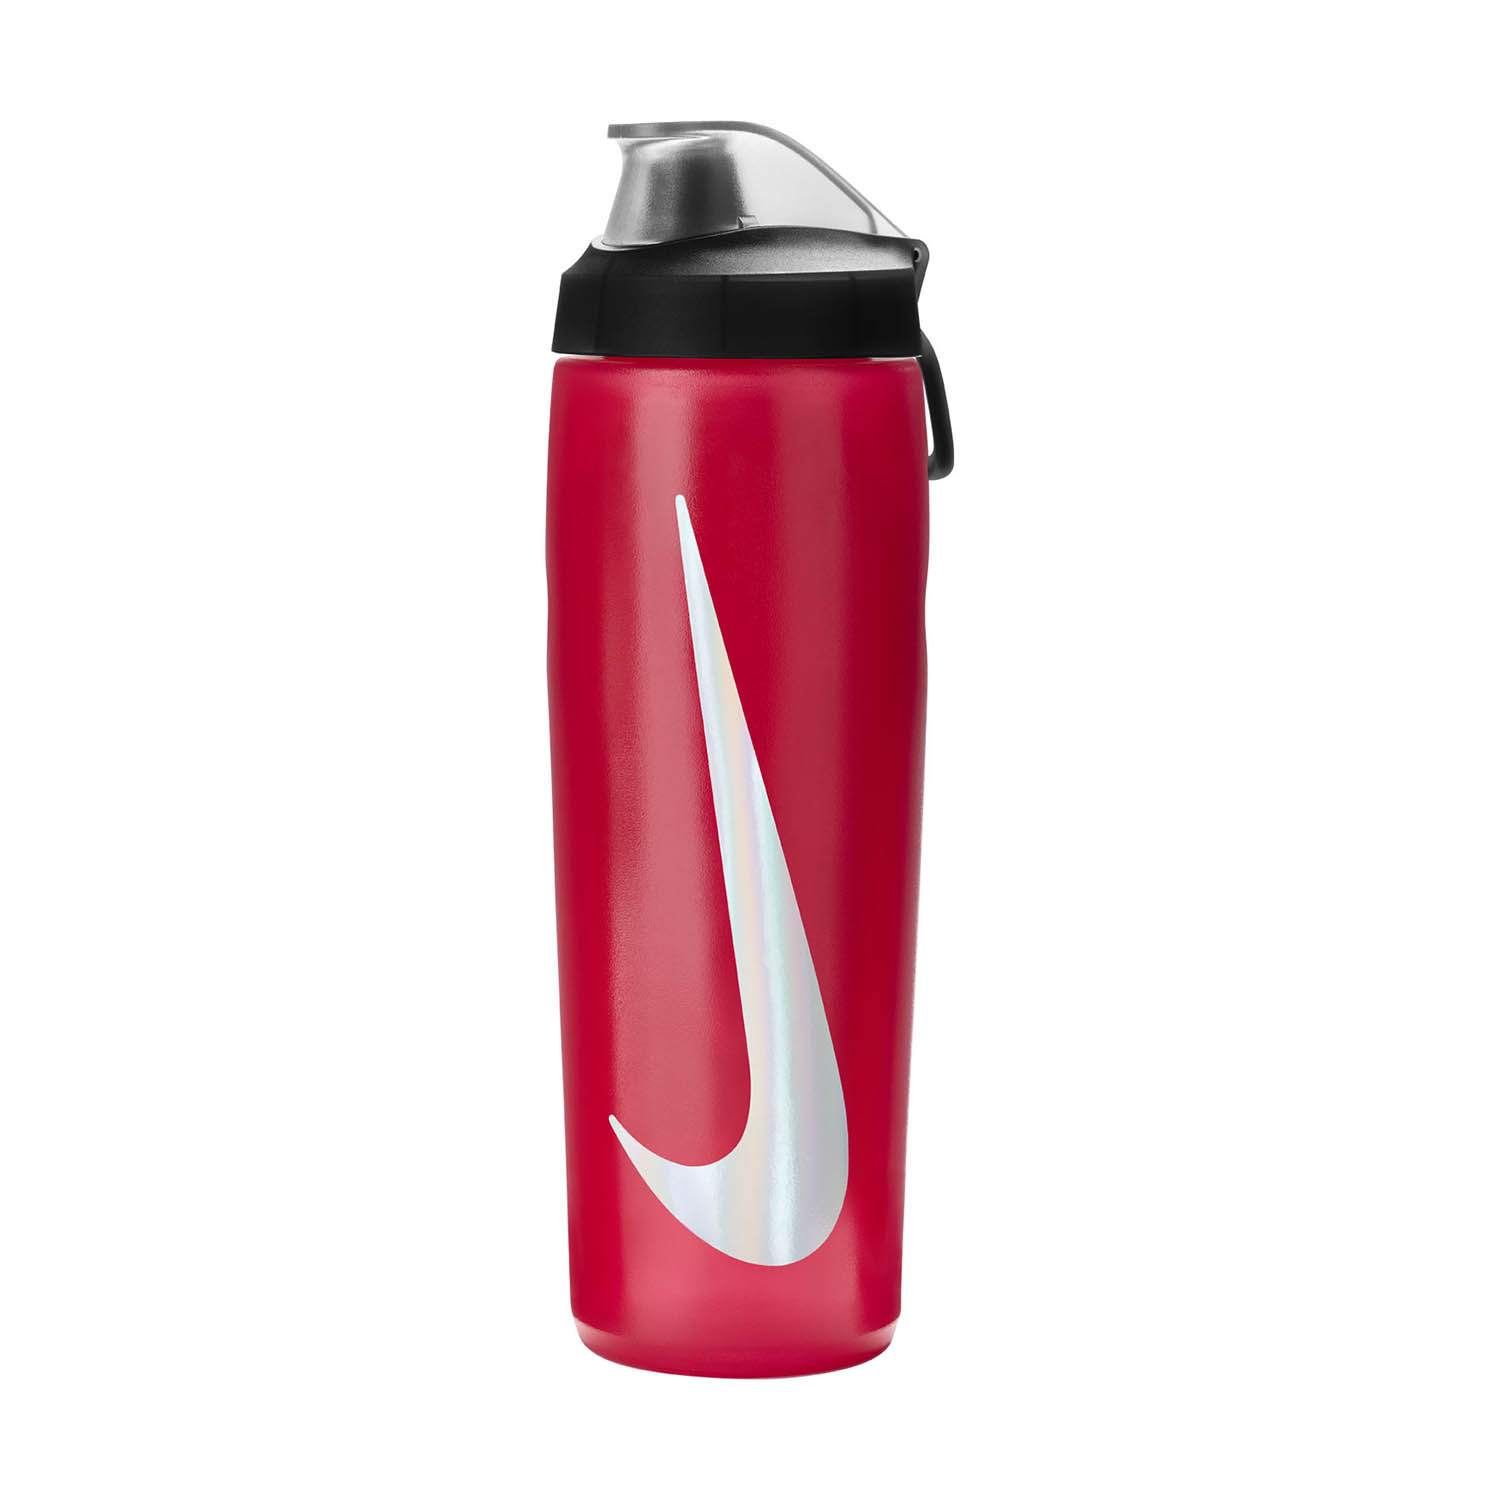 Nike Refuel Locking Cantimplora - University Red/Black/Silver Iridescent